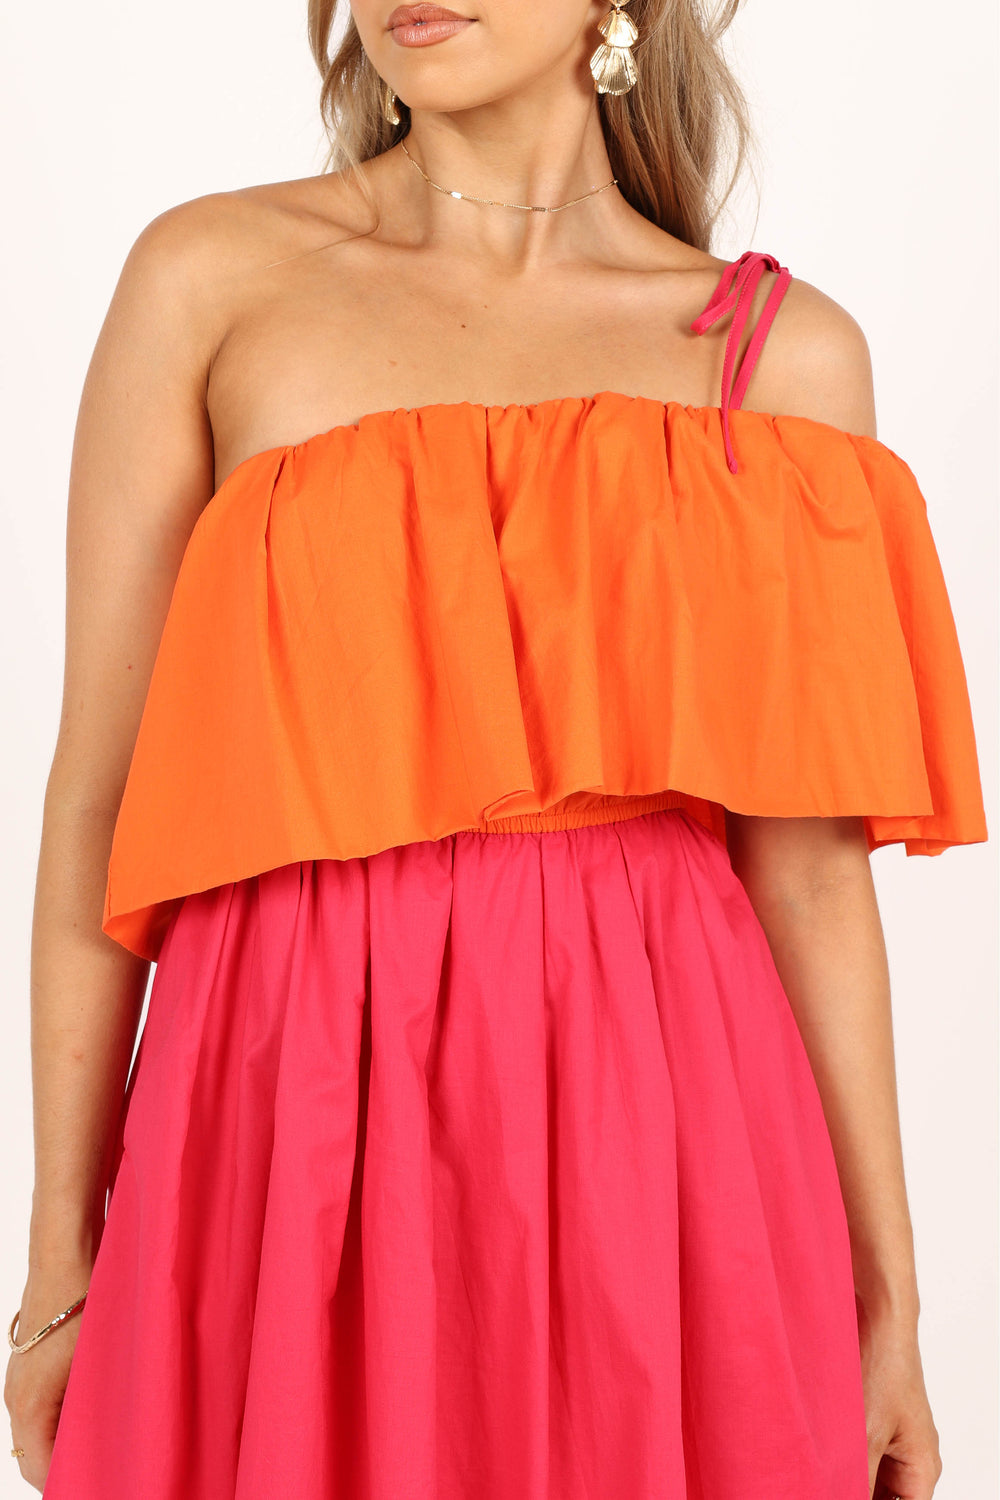 Maeva One Shoulder Mini Dress - Pink/Orange - Petal & Pup USA